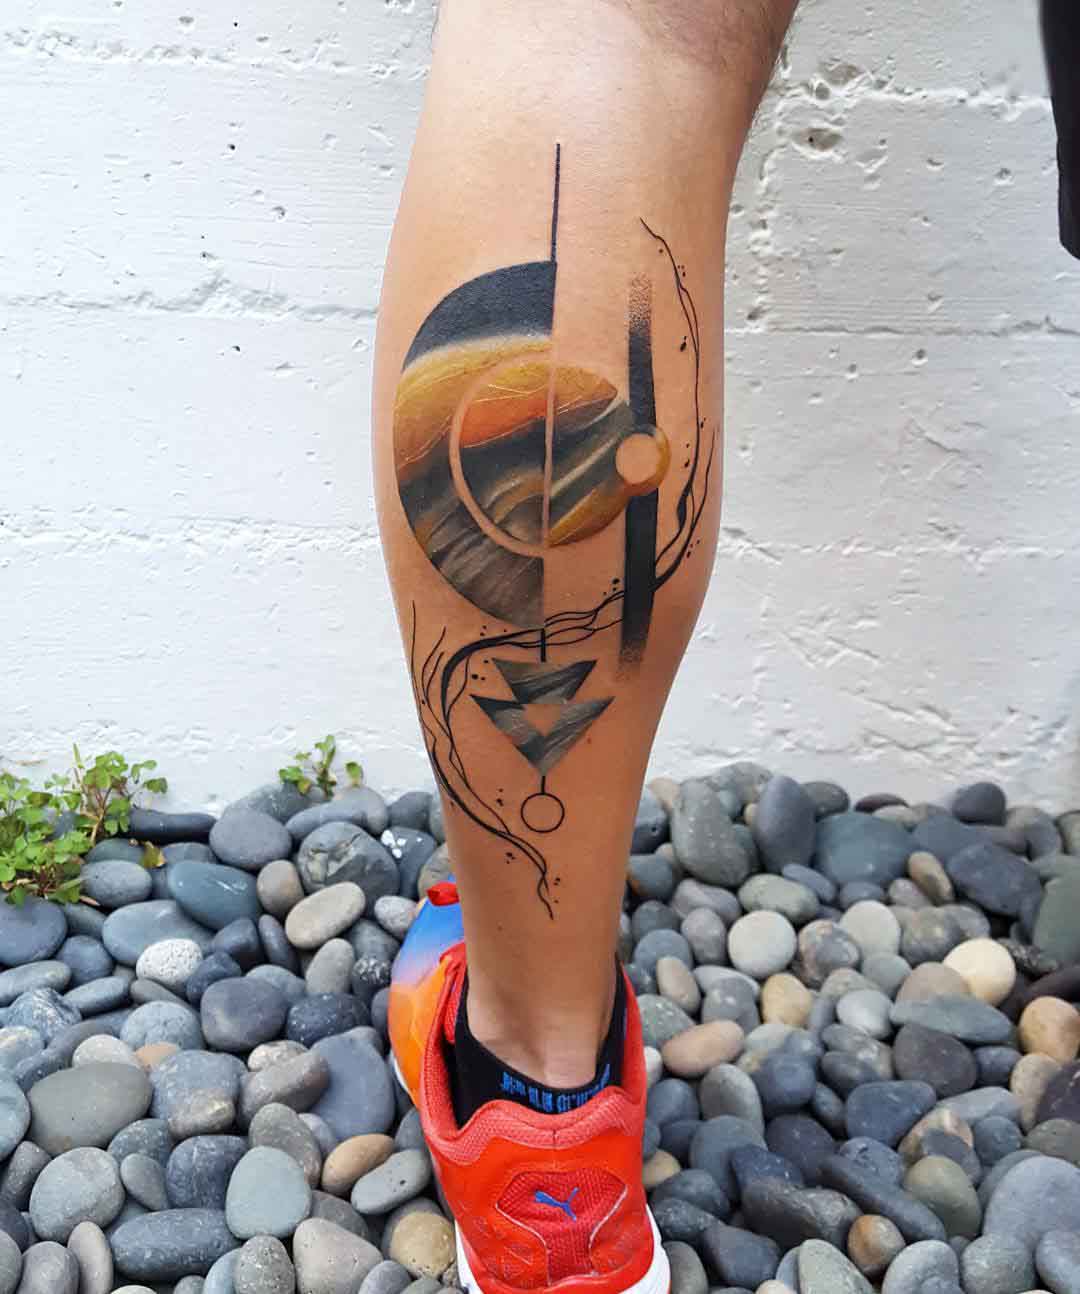 Space Geometry Tattoo - Best Tattoo Ideas Gallery